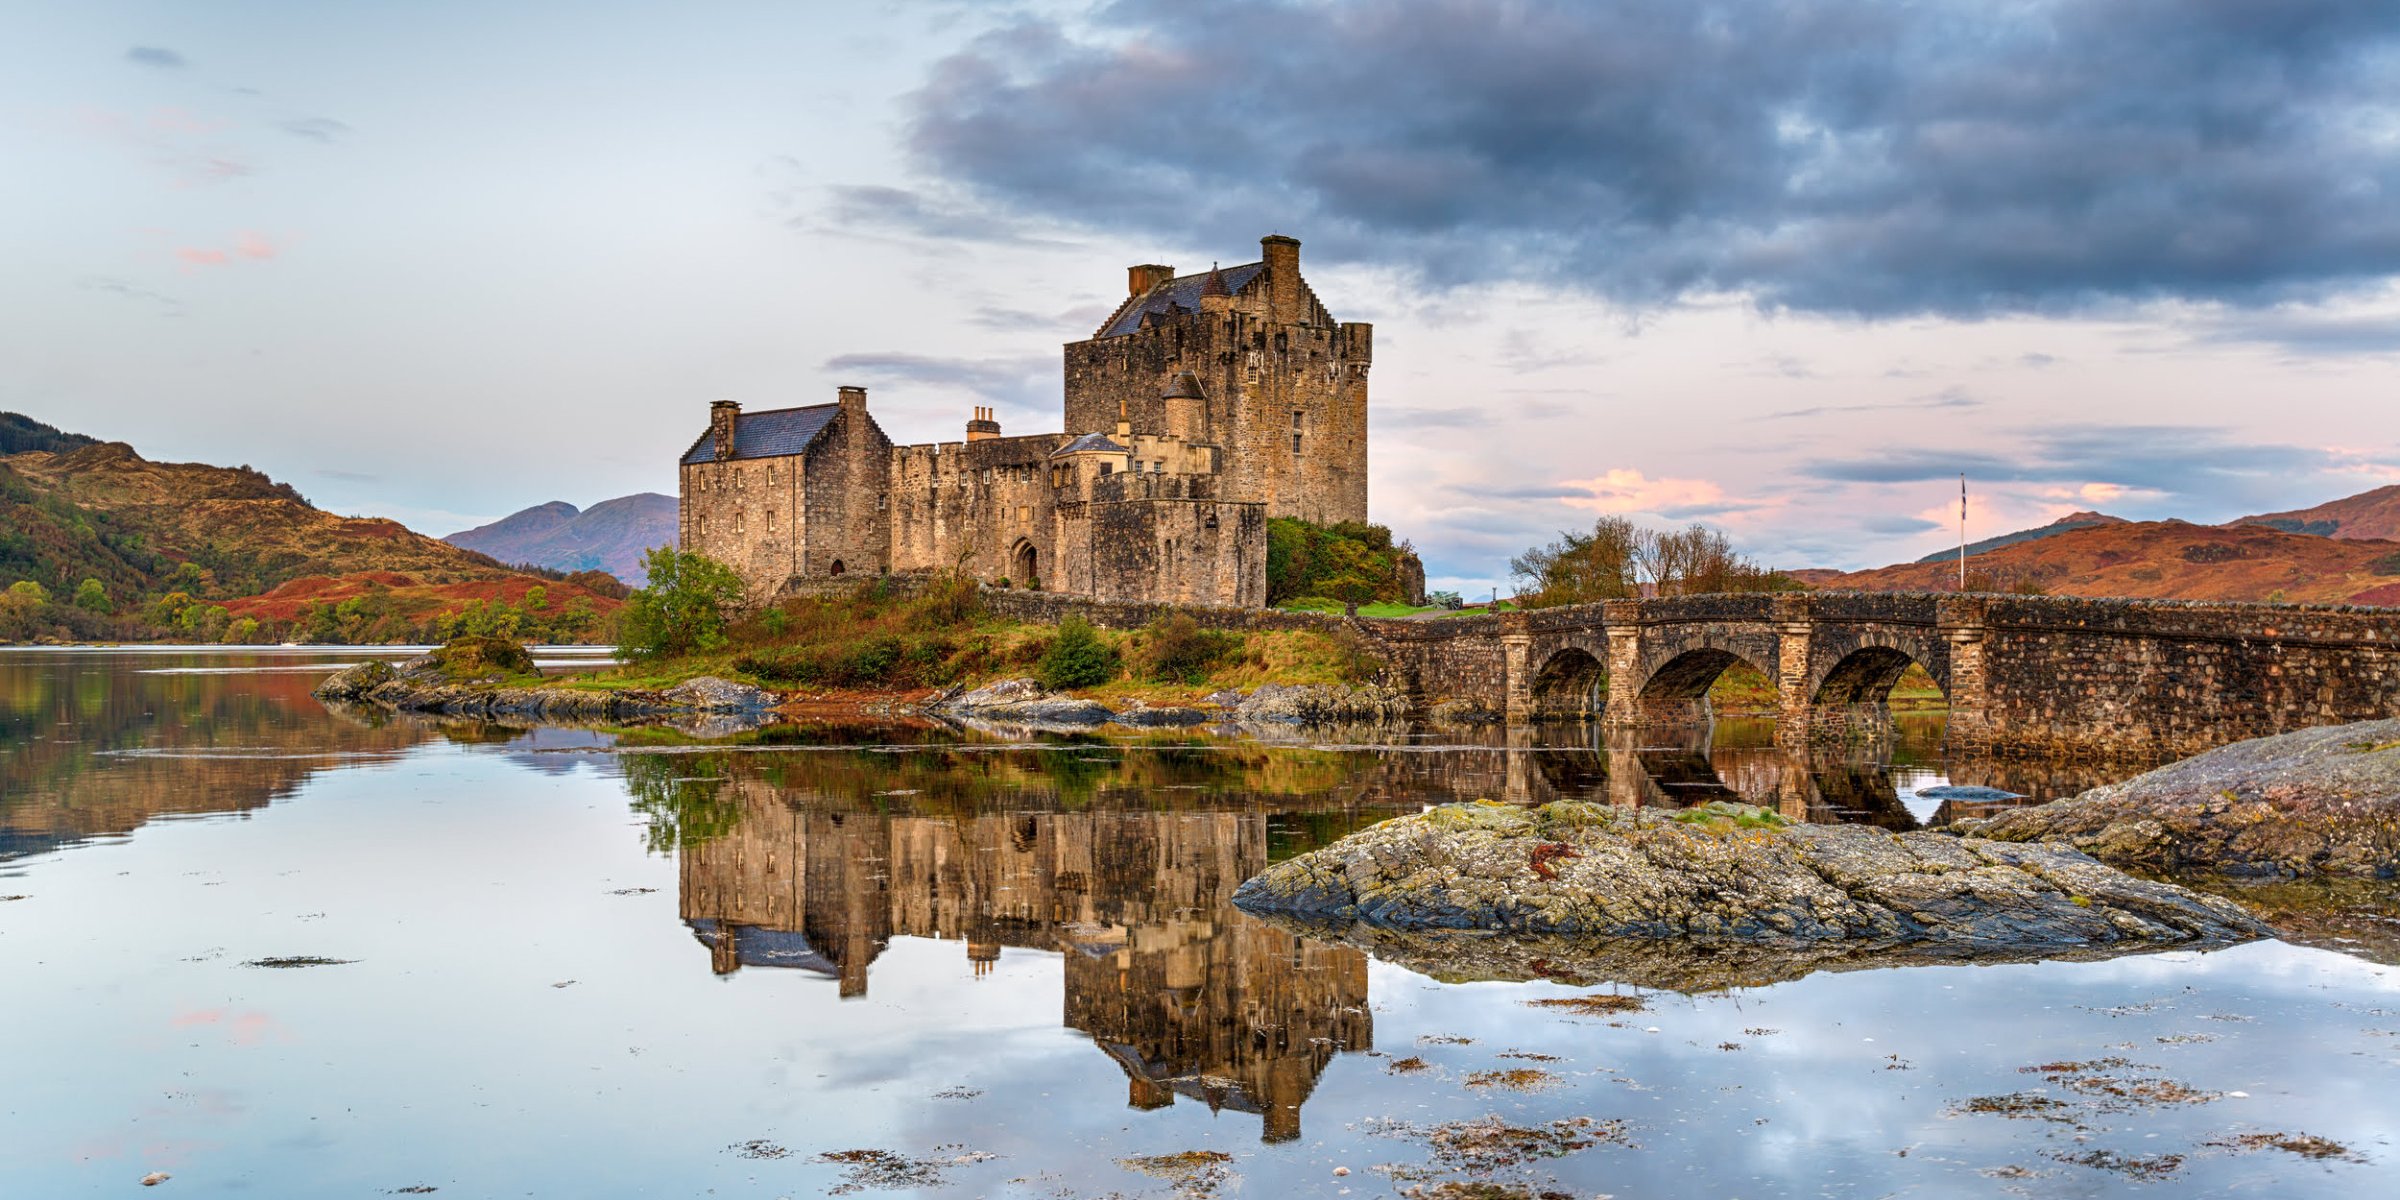 Eilean donan castle - Schotland rondreis